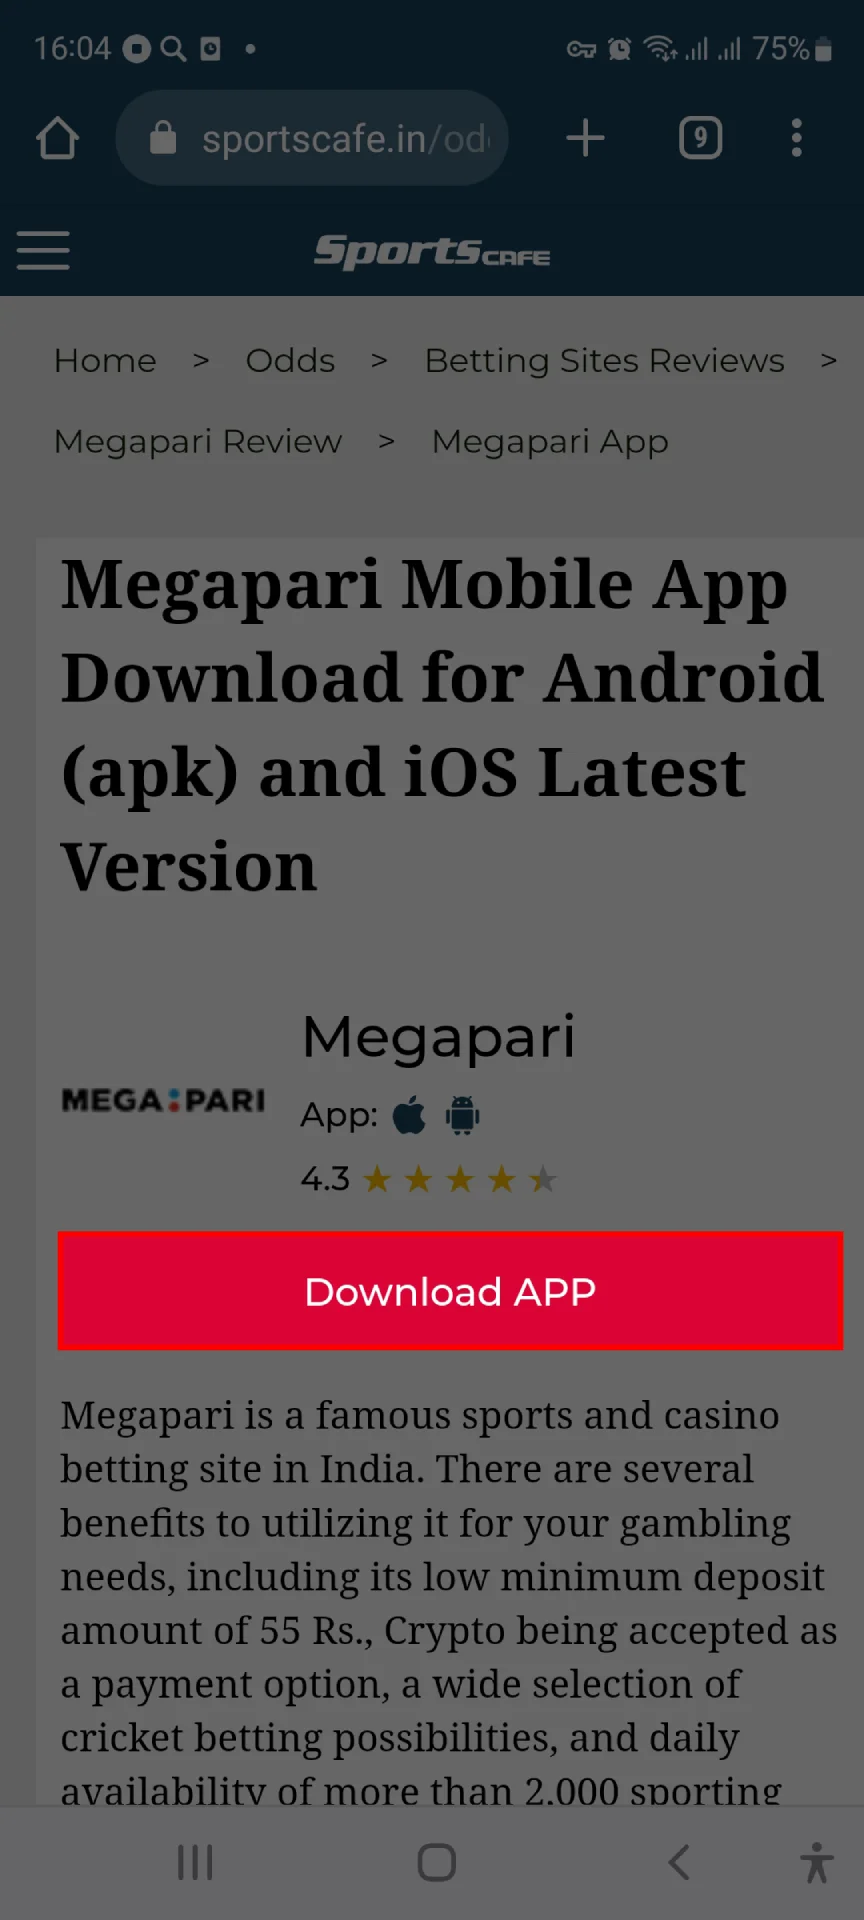 Visit the Megapari site to download the app.